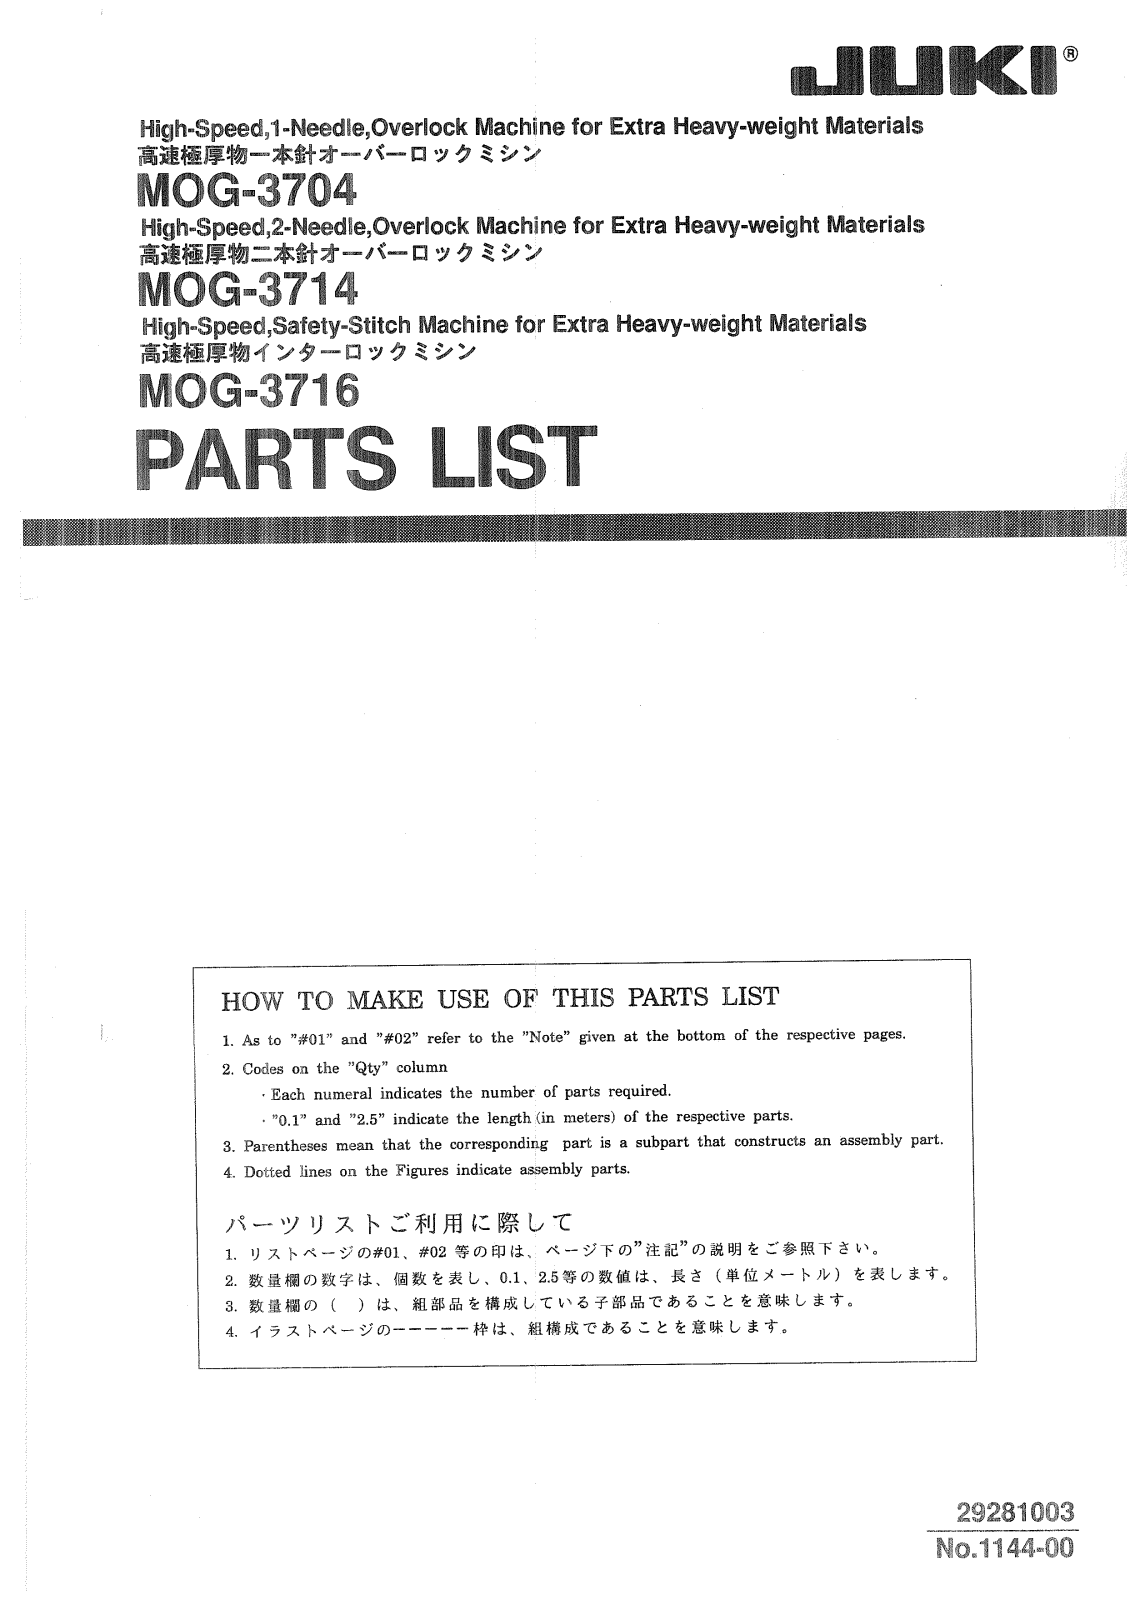 Juki MOG-3704, MOG-3714, MOG-3716 Parts List